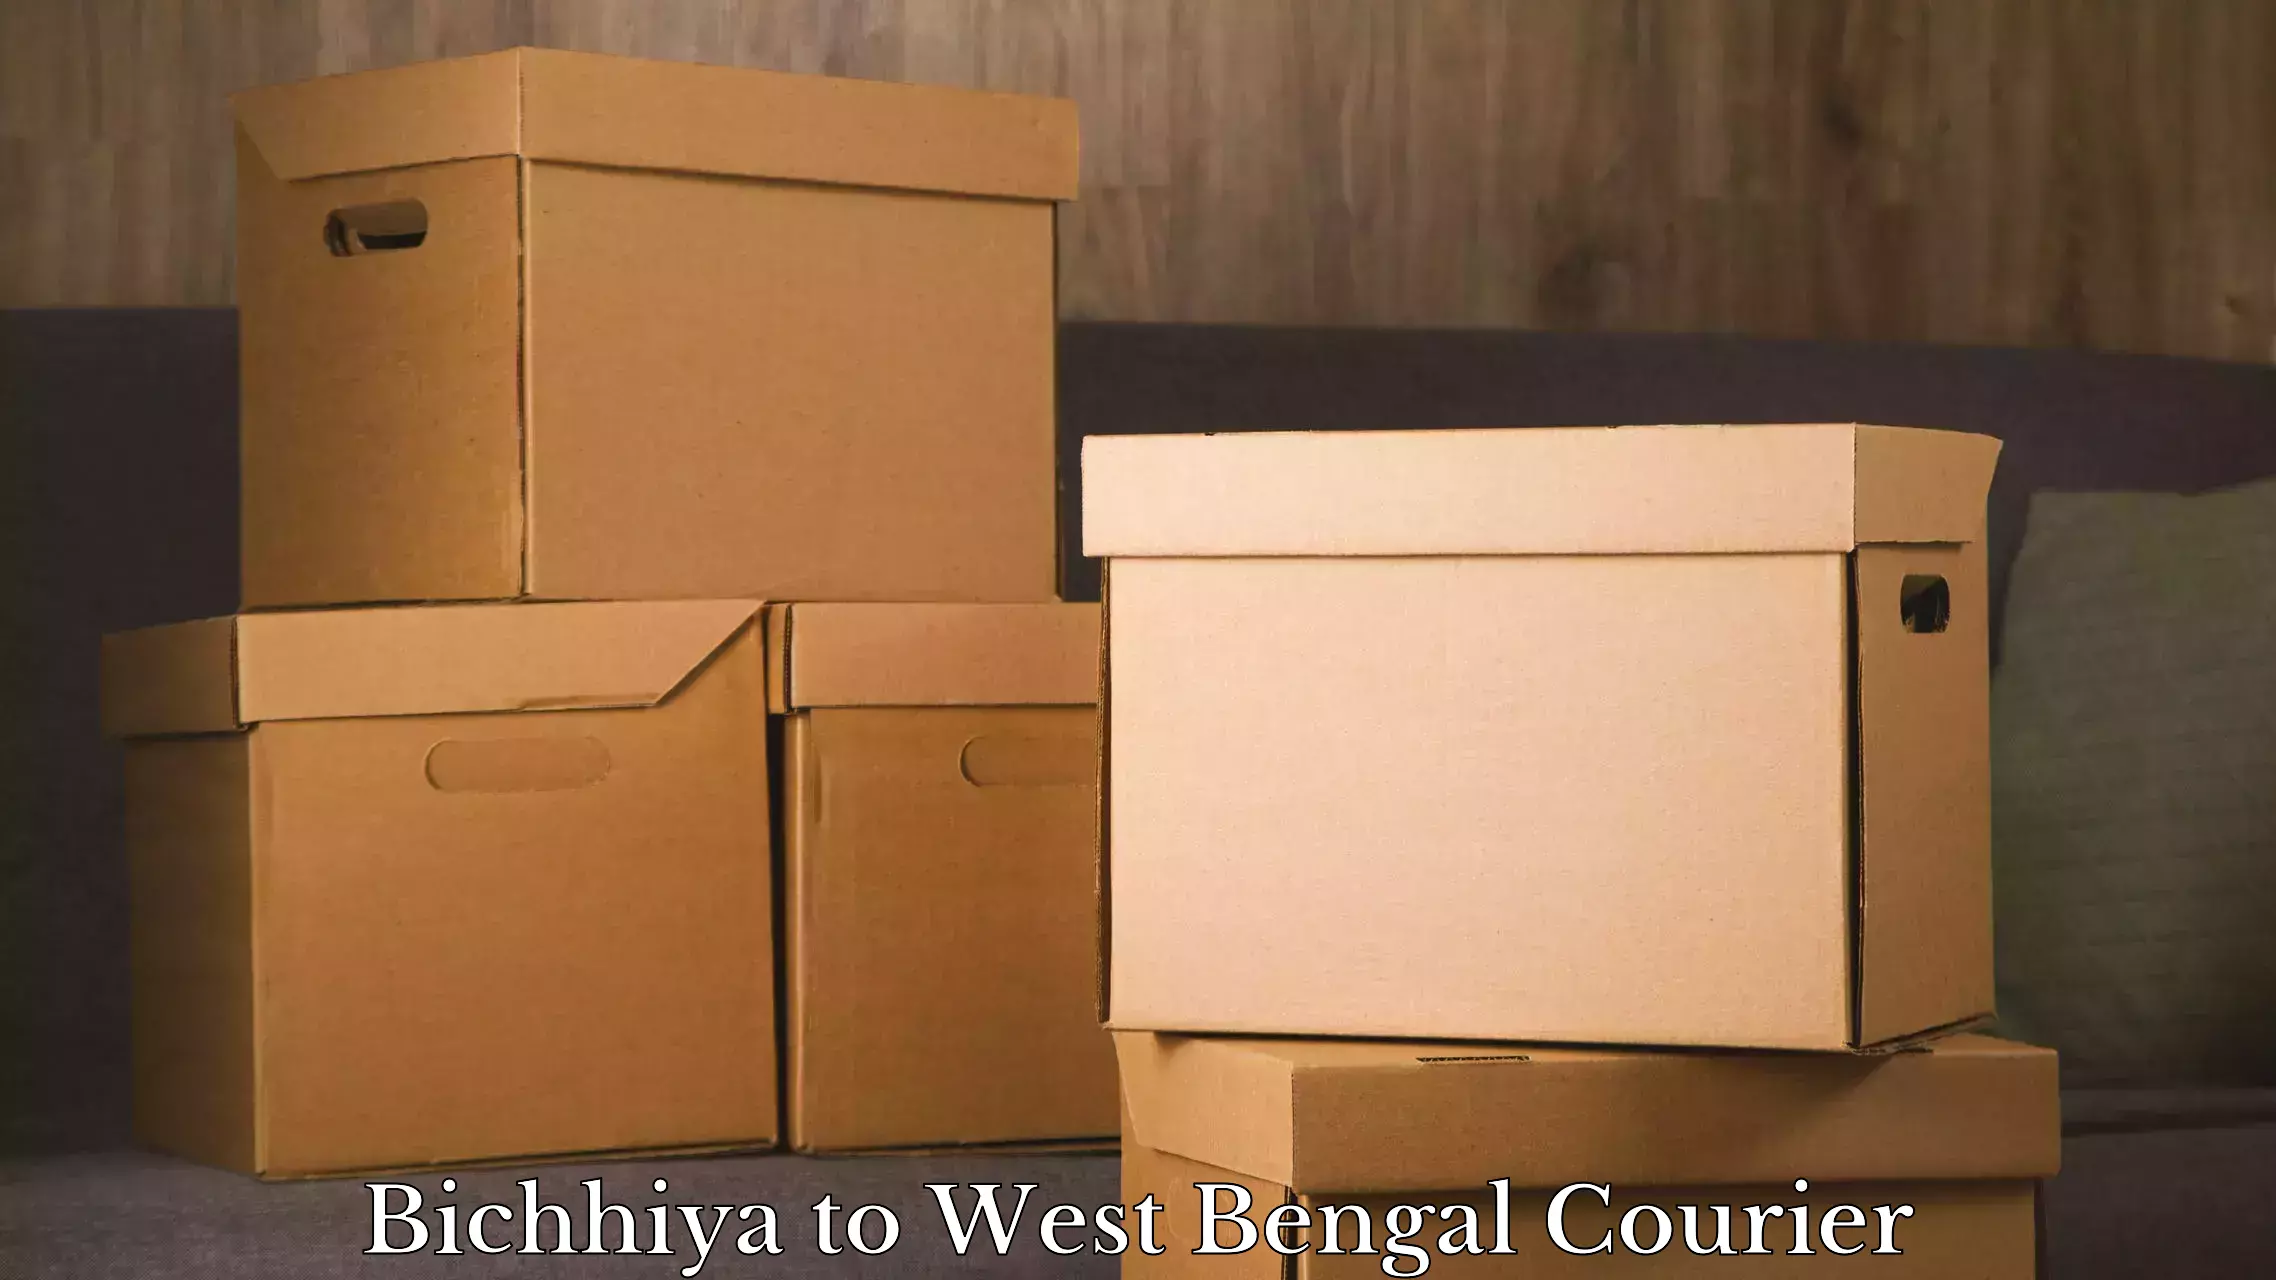 Same day luggage service in Bichhiya to West Bengal